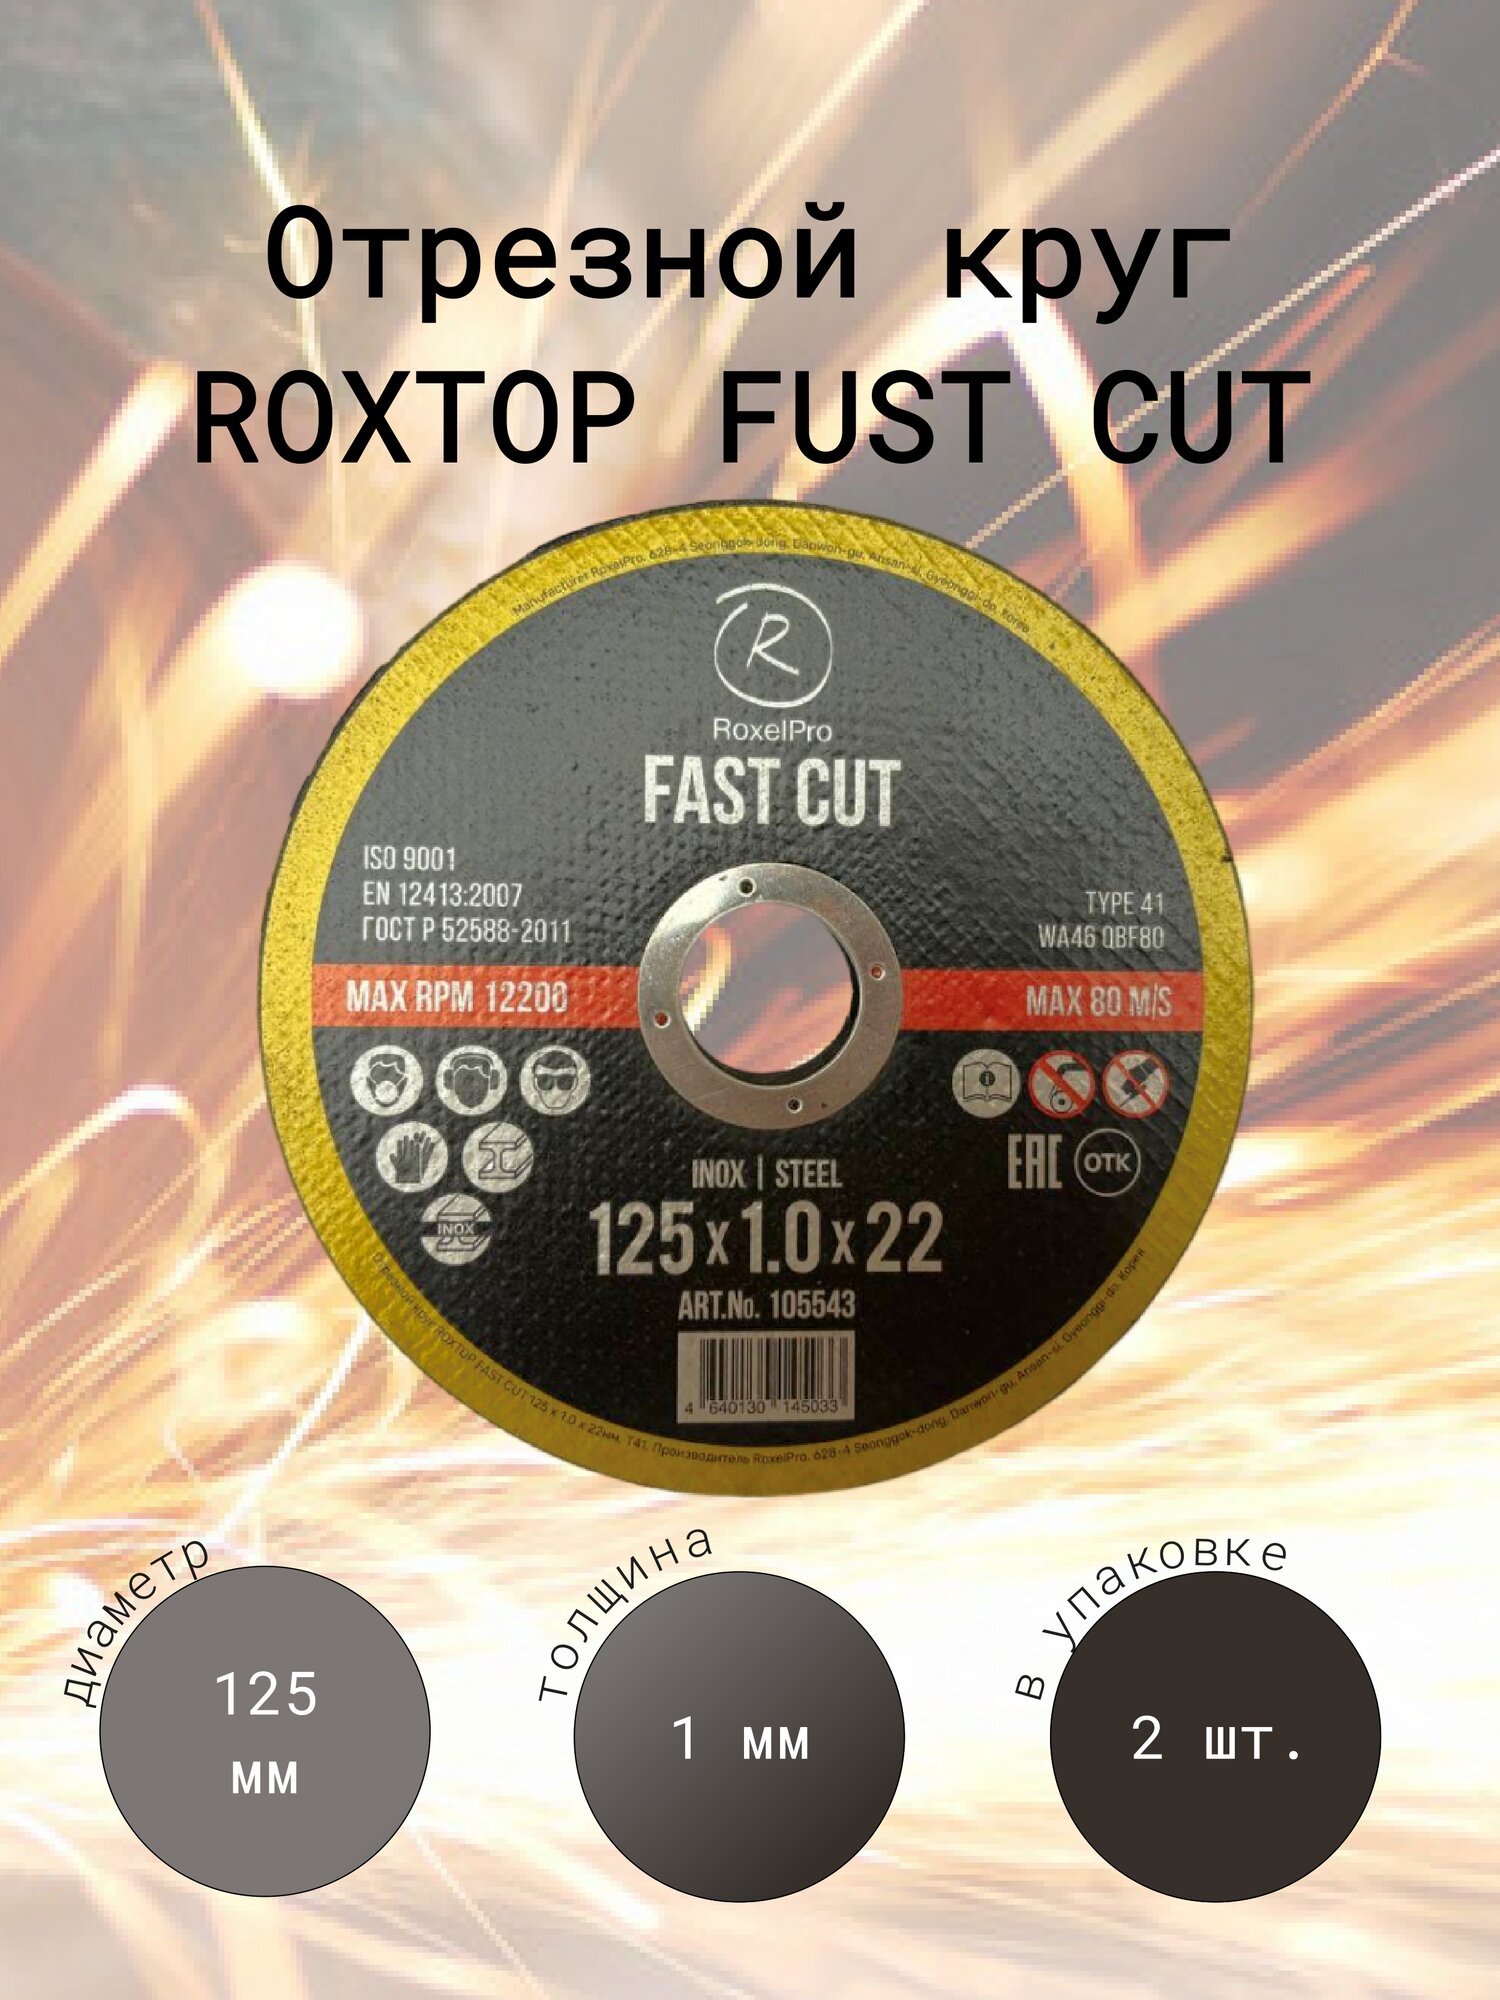 Отрезной круг RoxelPro ROXTOP FAST CUT, 125 x 1.0 x 22мм, Т41, Упаковка 2 шт.